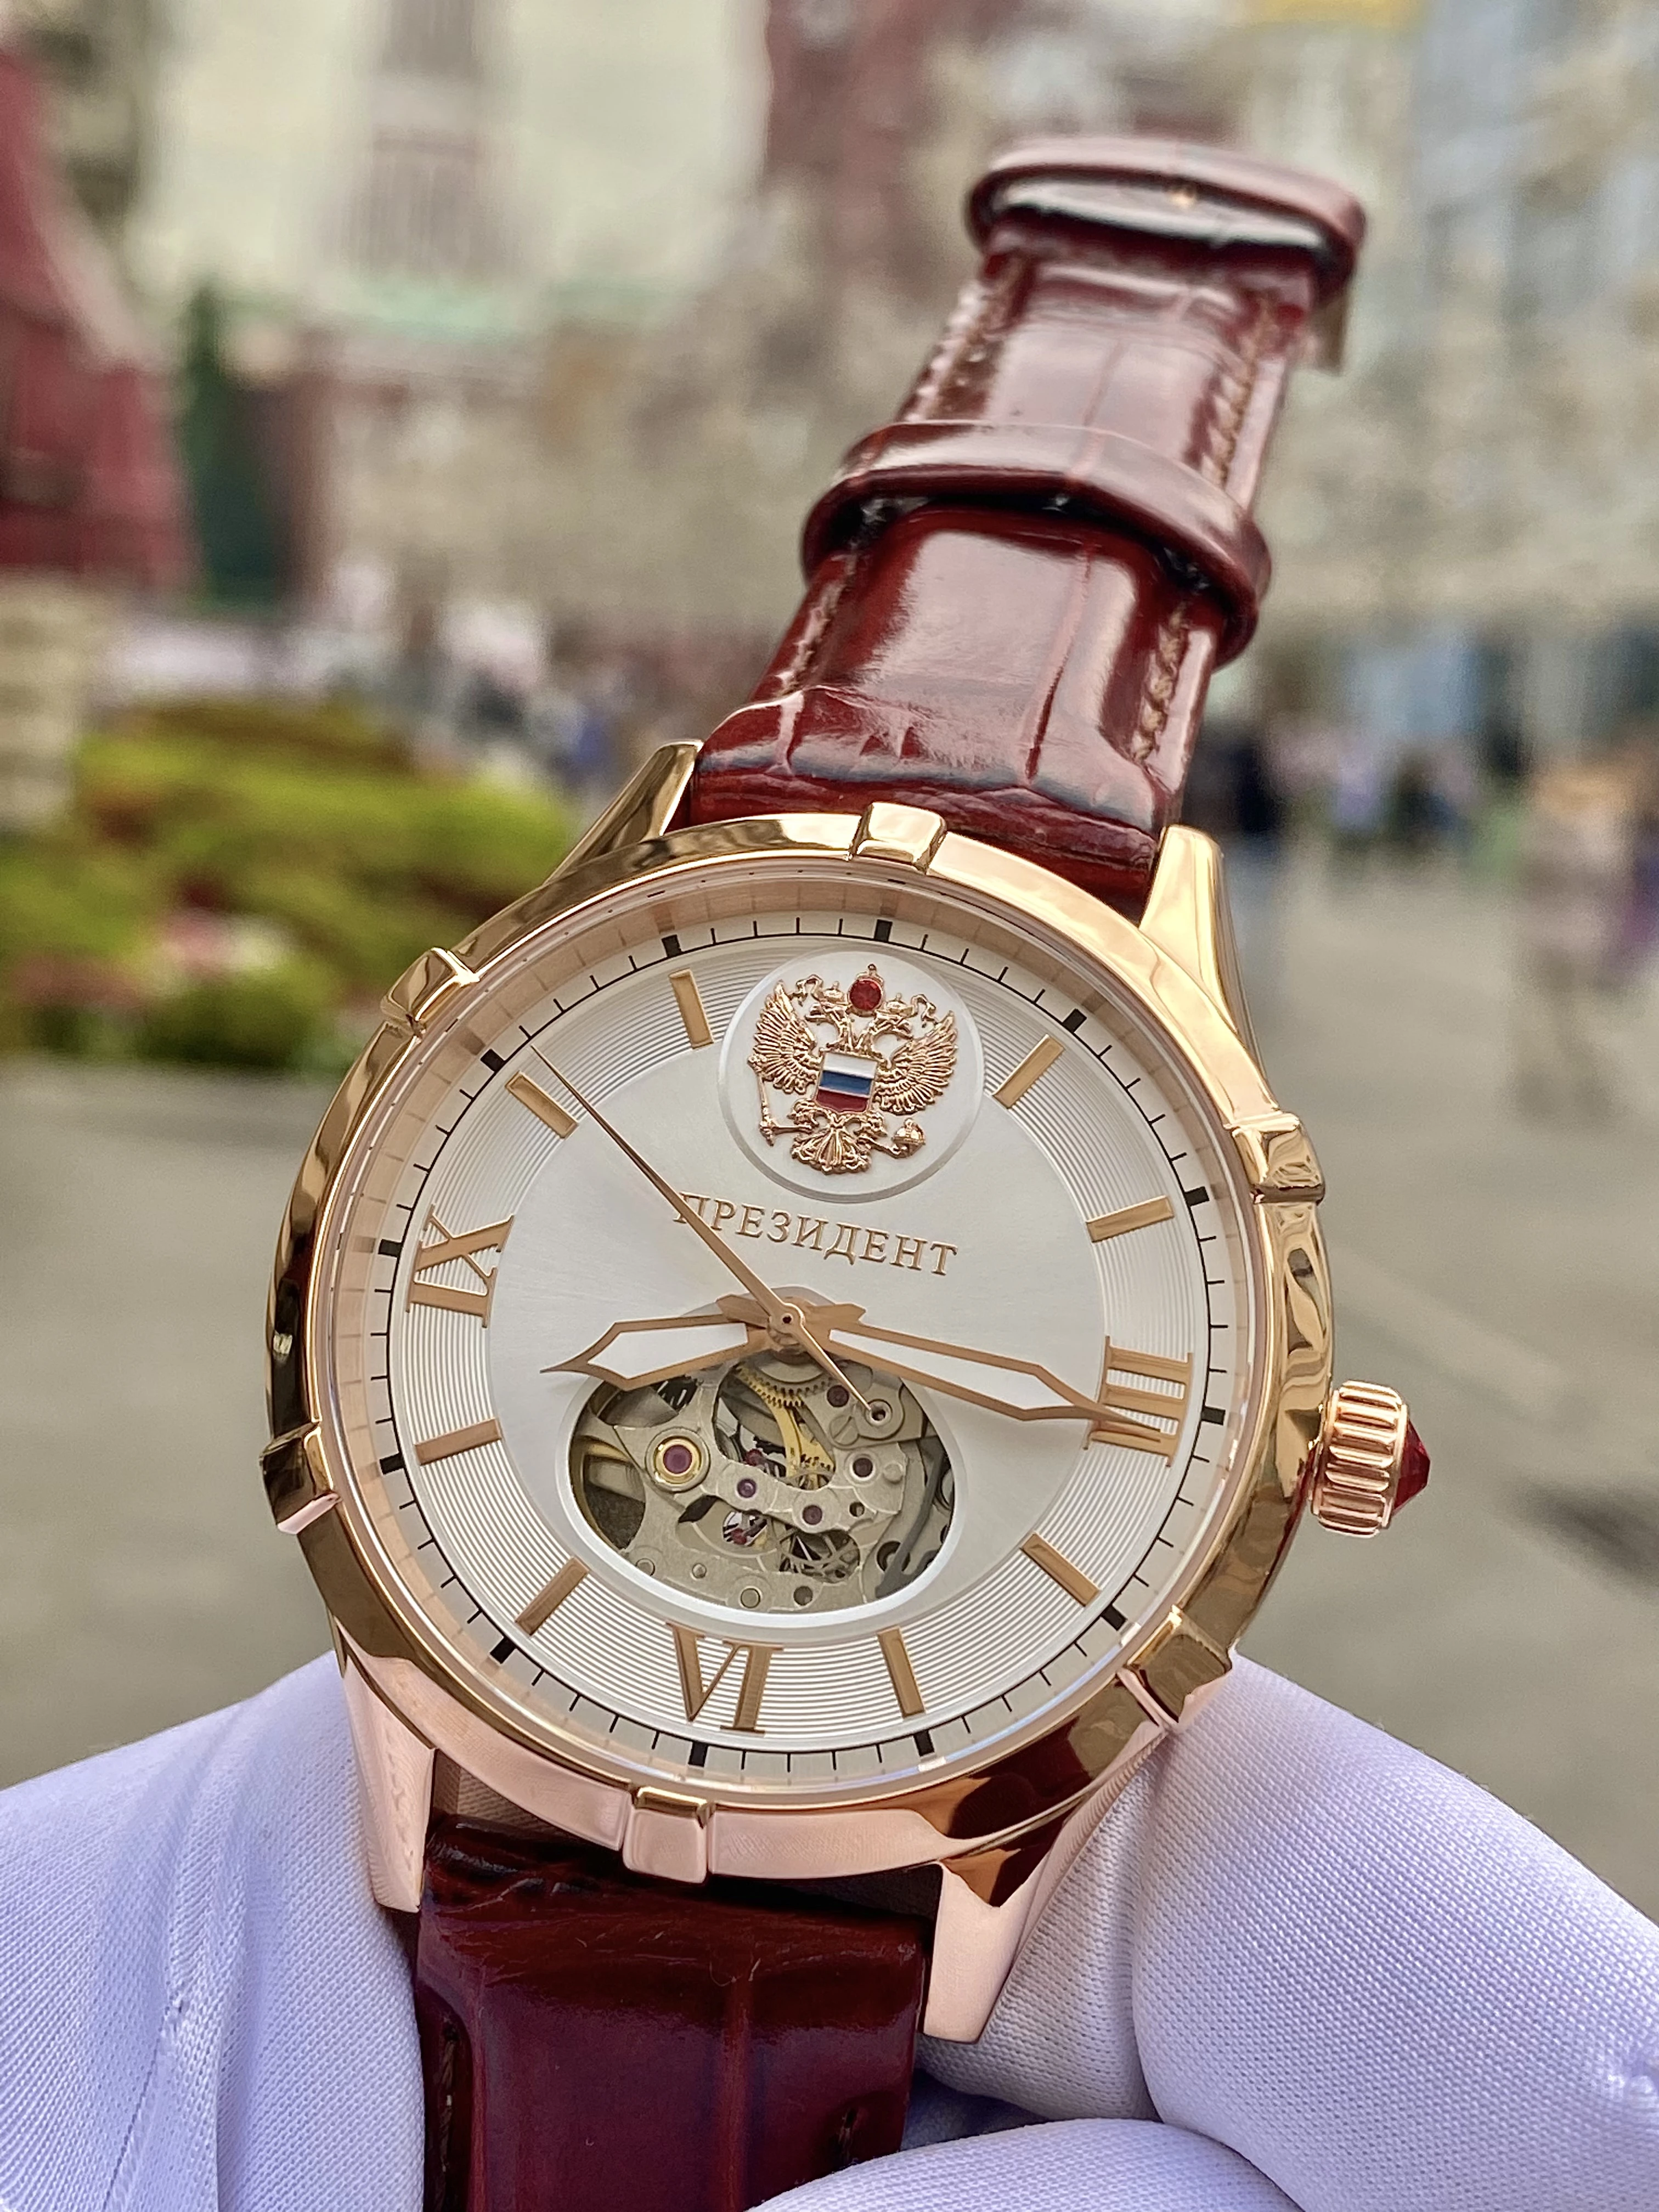 Reloj Presidente 4609161|Relojes mecánicos| - AliExpress